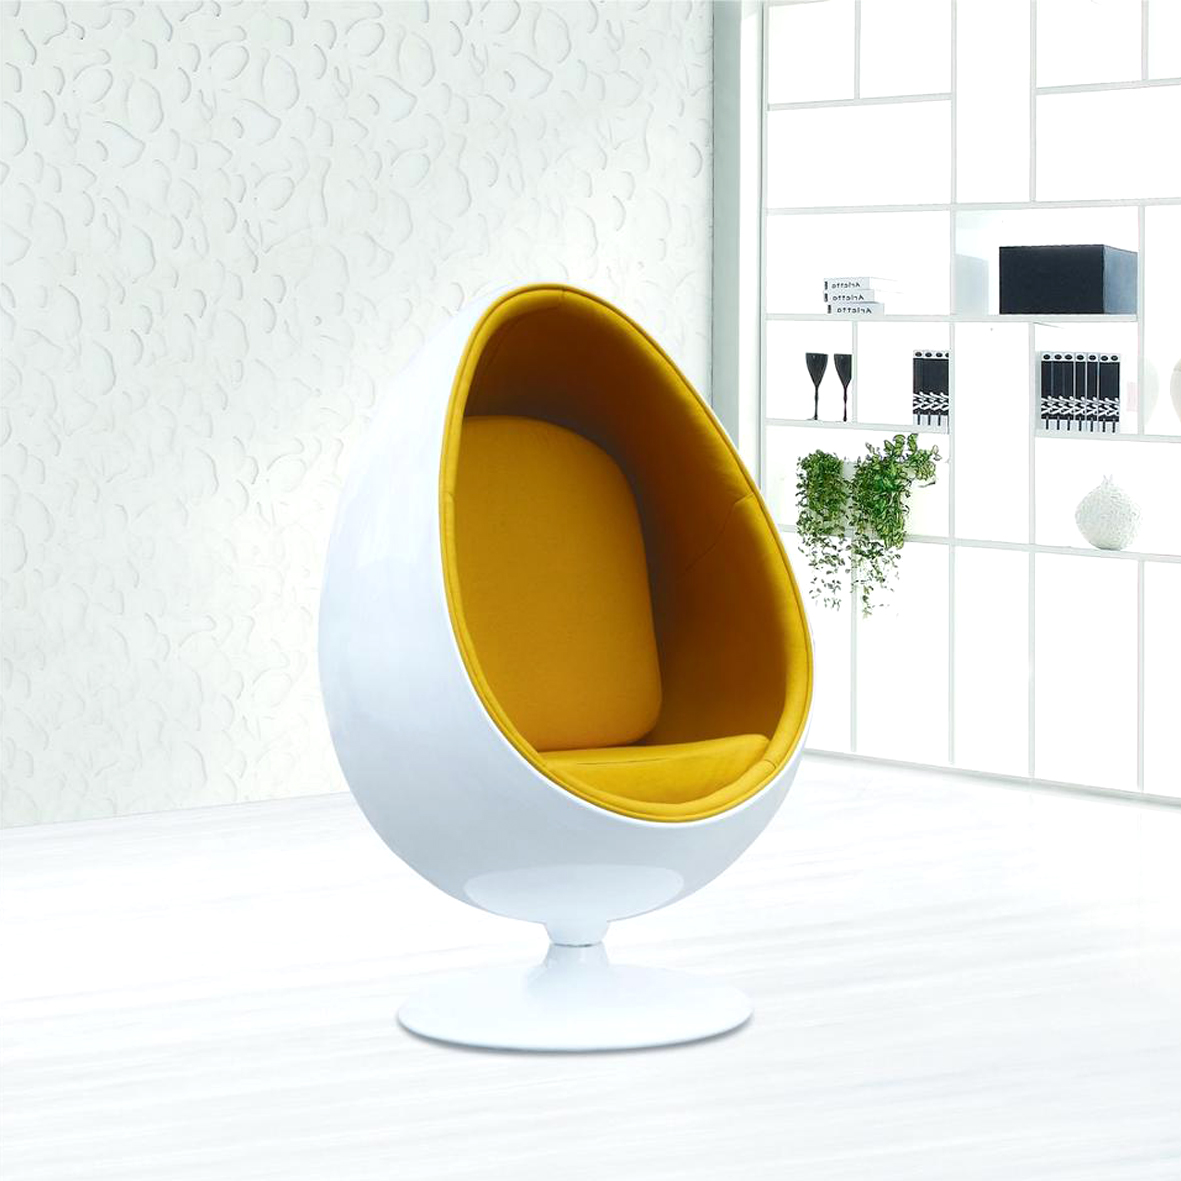 Кресло Egg Chair желтое